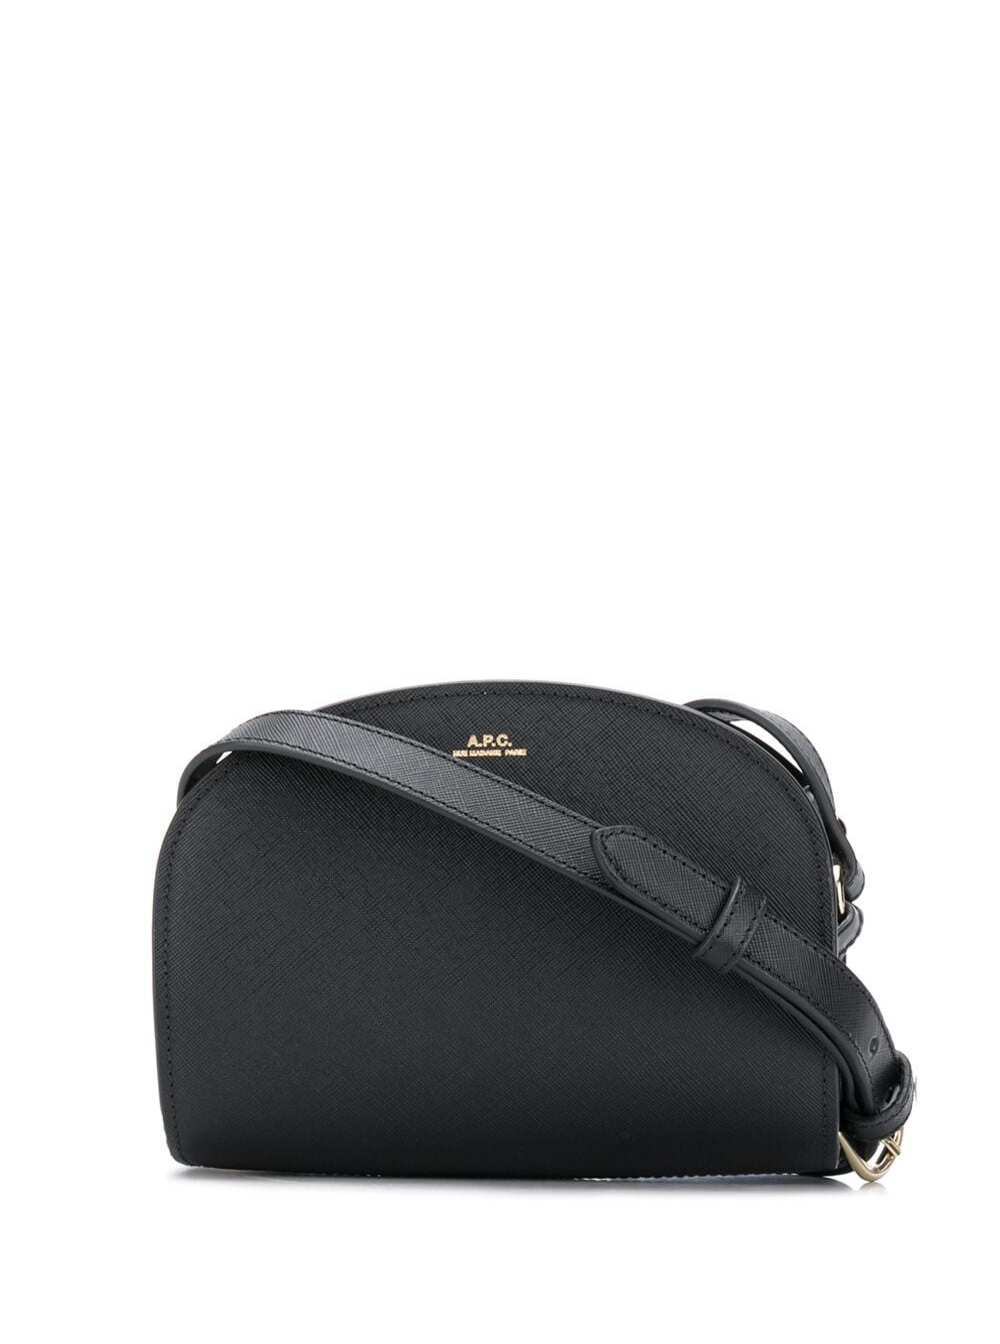 Apc A.p.c. Womans Sac Demi-lune Mini Black Leather Crossbody Bag